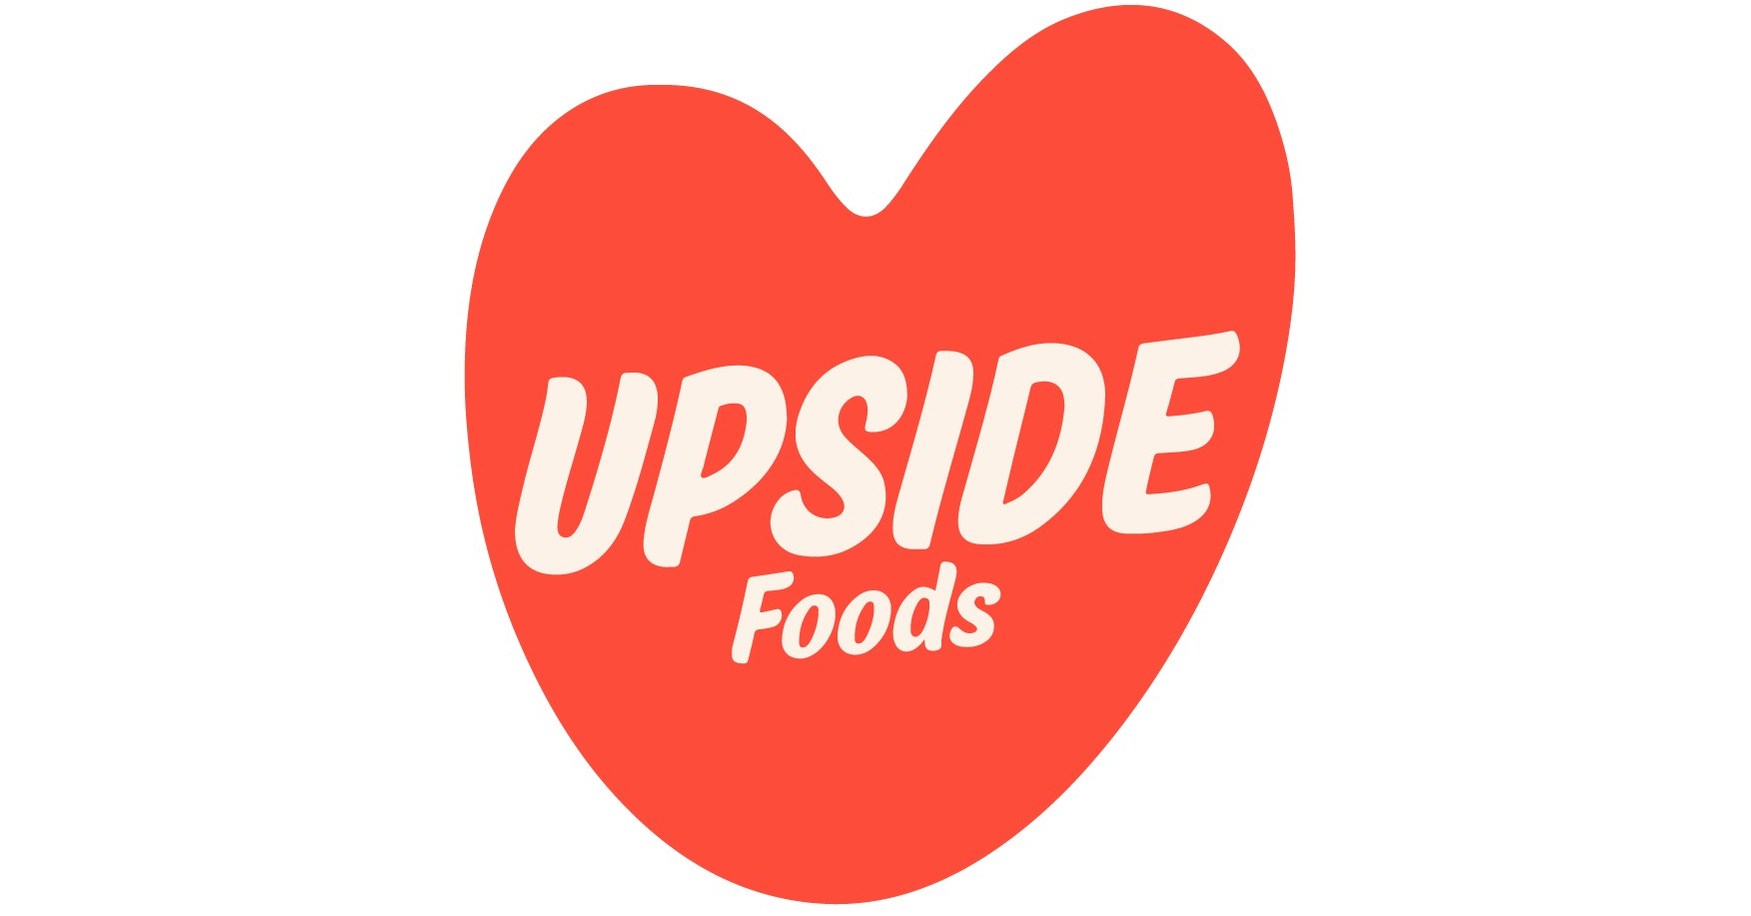 UPSIDE Foods